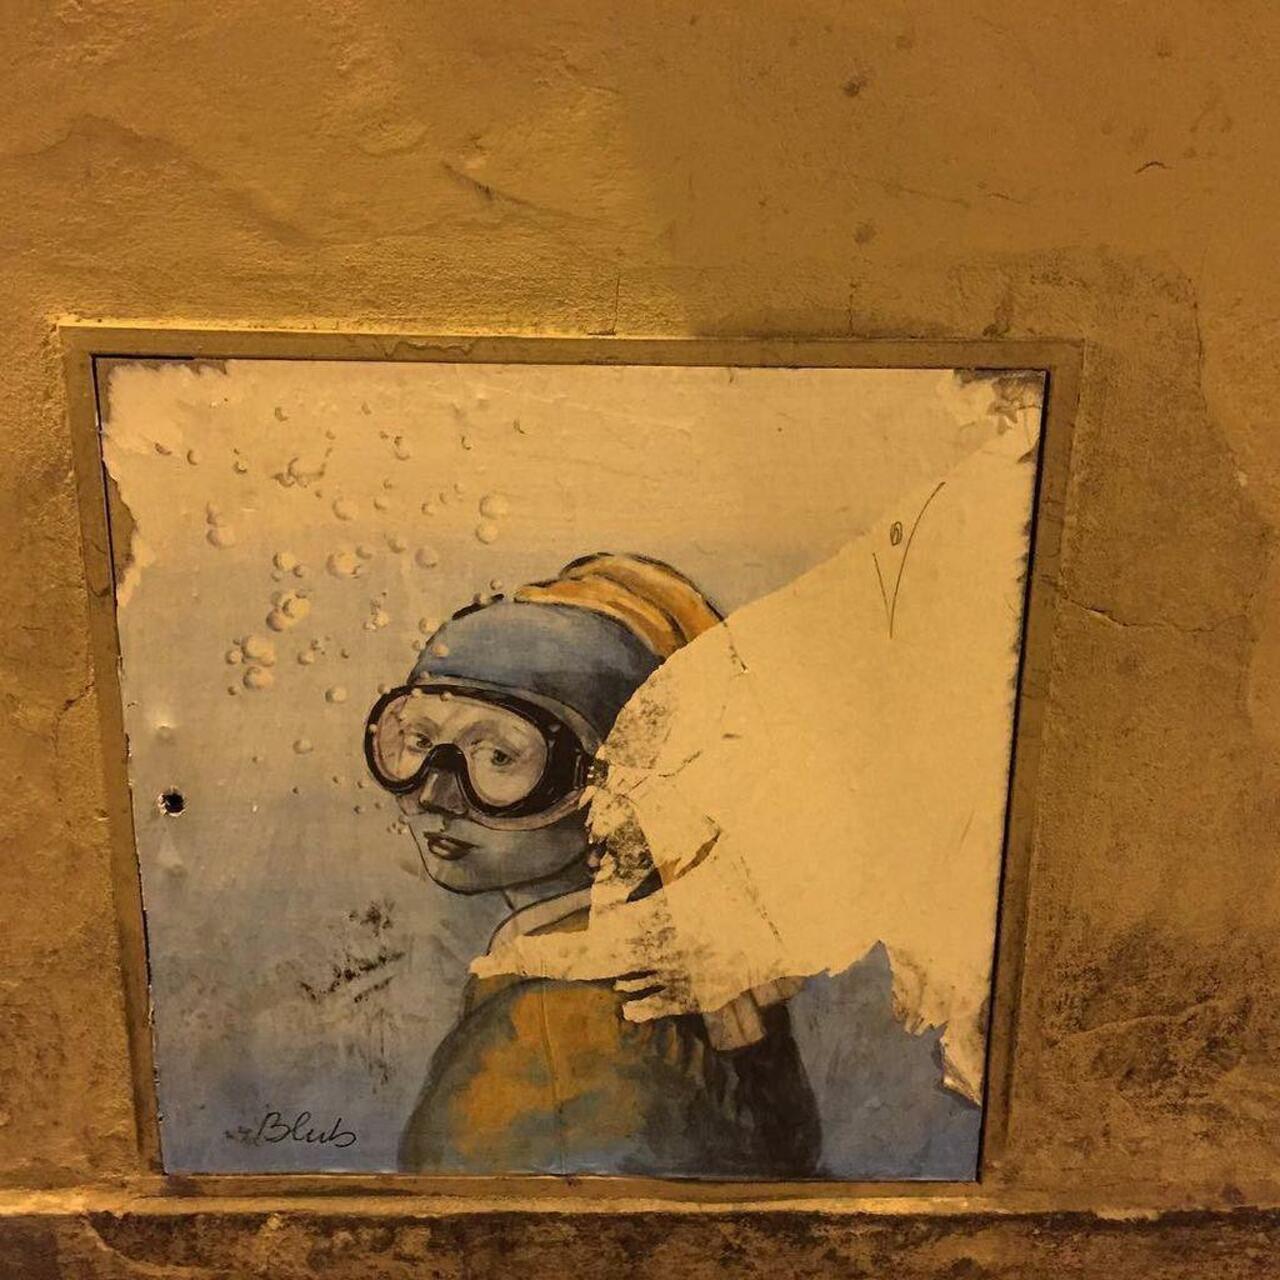 RT @artpushr: via #moriirom "http://bit.ly/1M8zHfS" #graffiti #streetart http://t.co/ZwPo9ZZidy